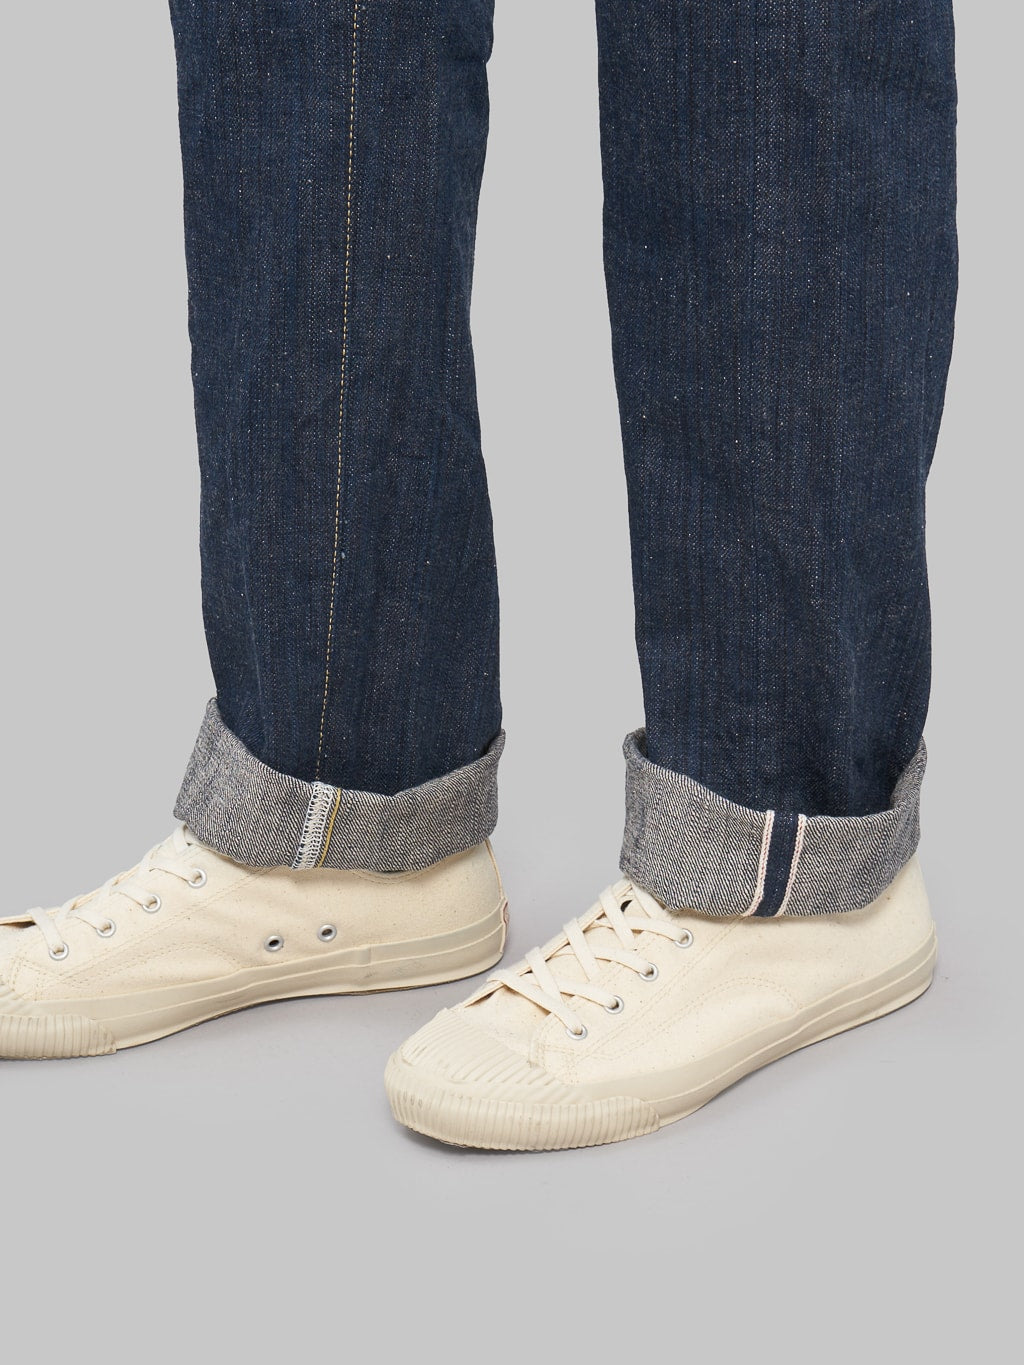 Oni denim kiwami indigo regular selvedge jeans selvedge detail